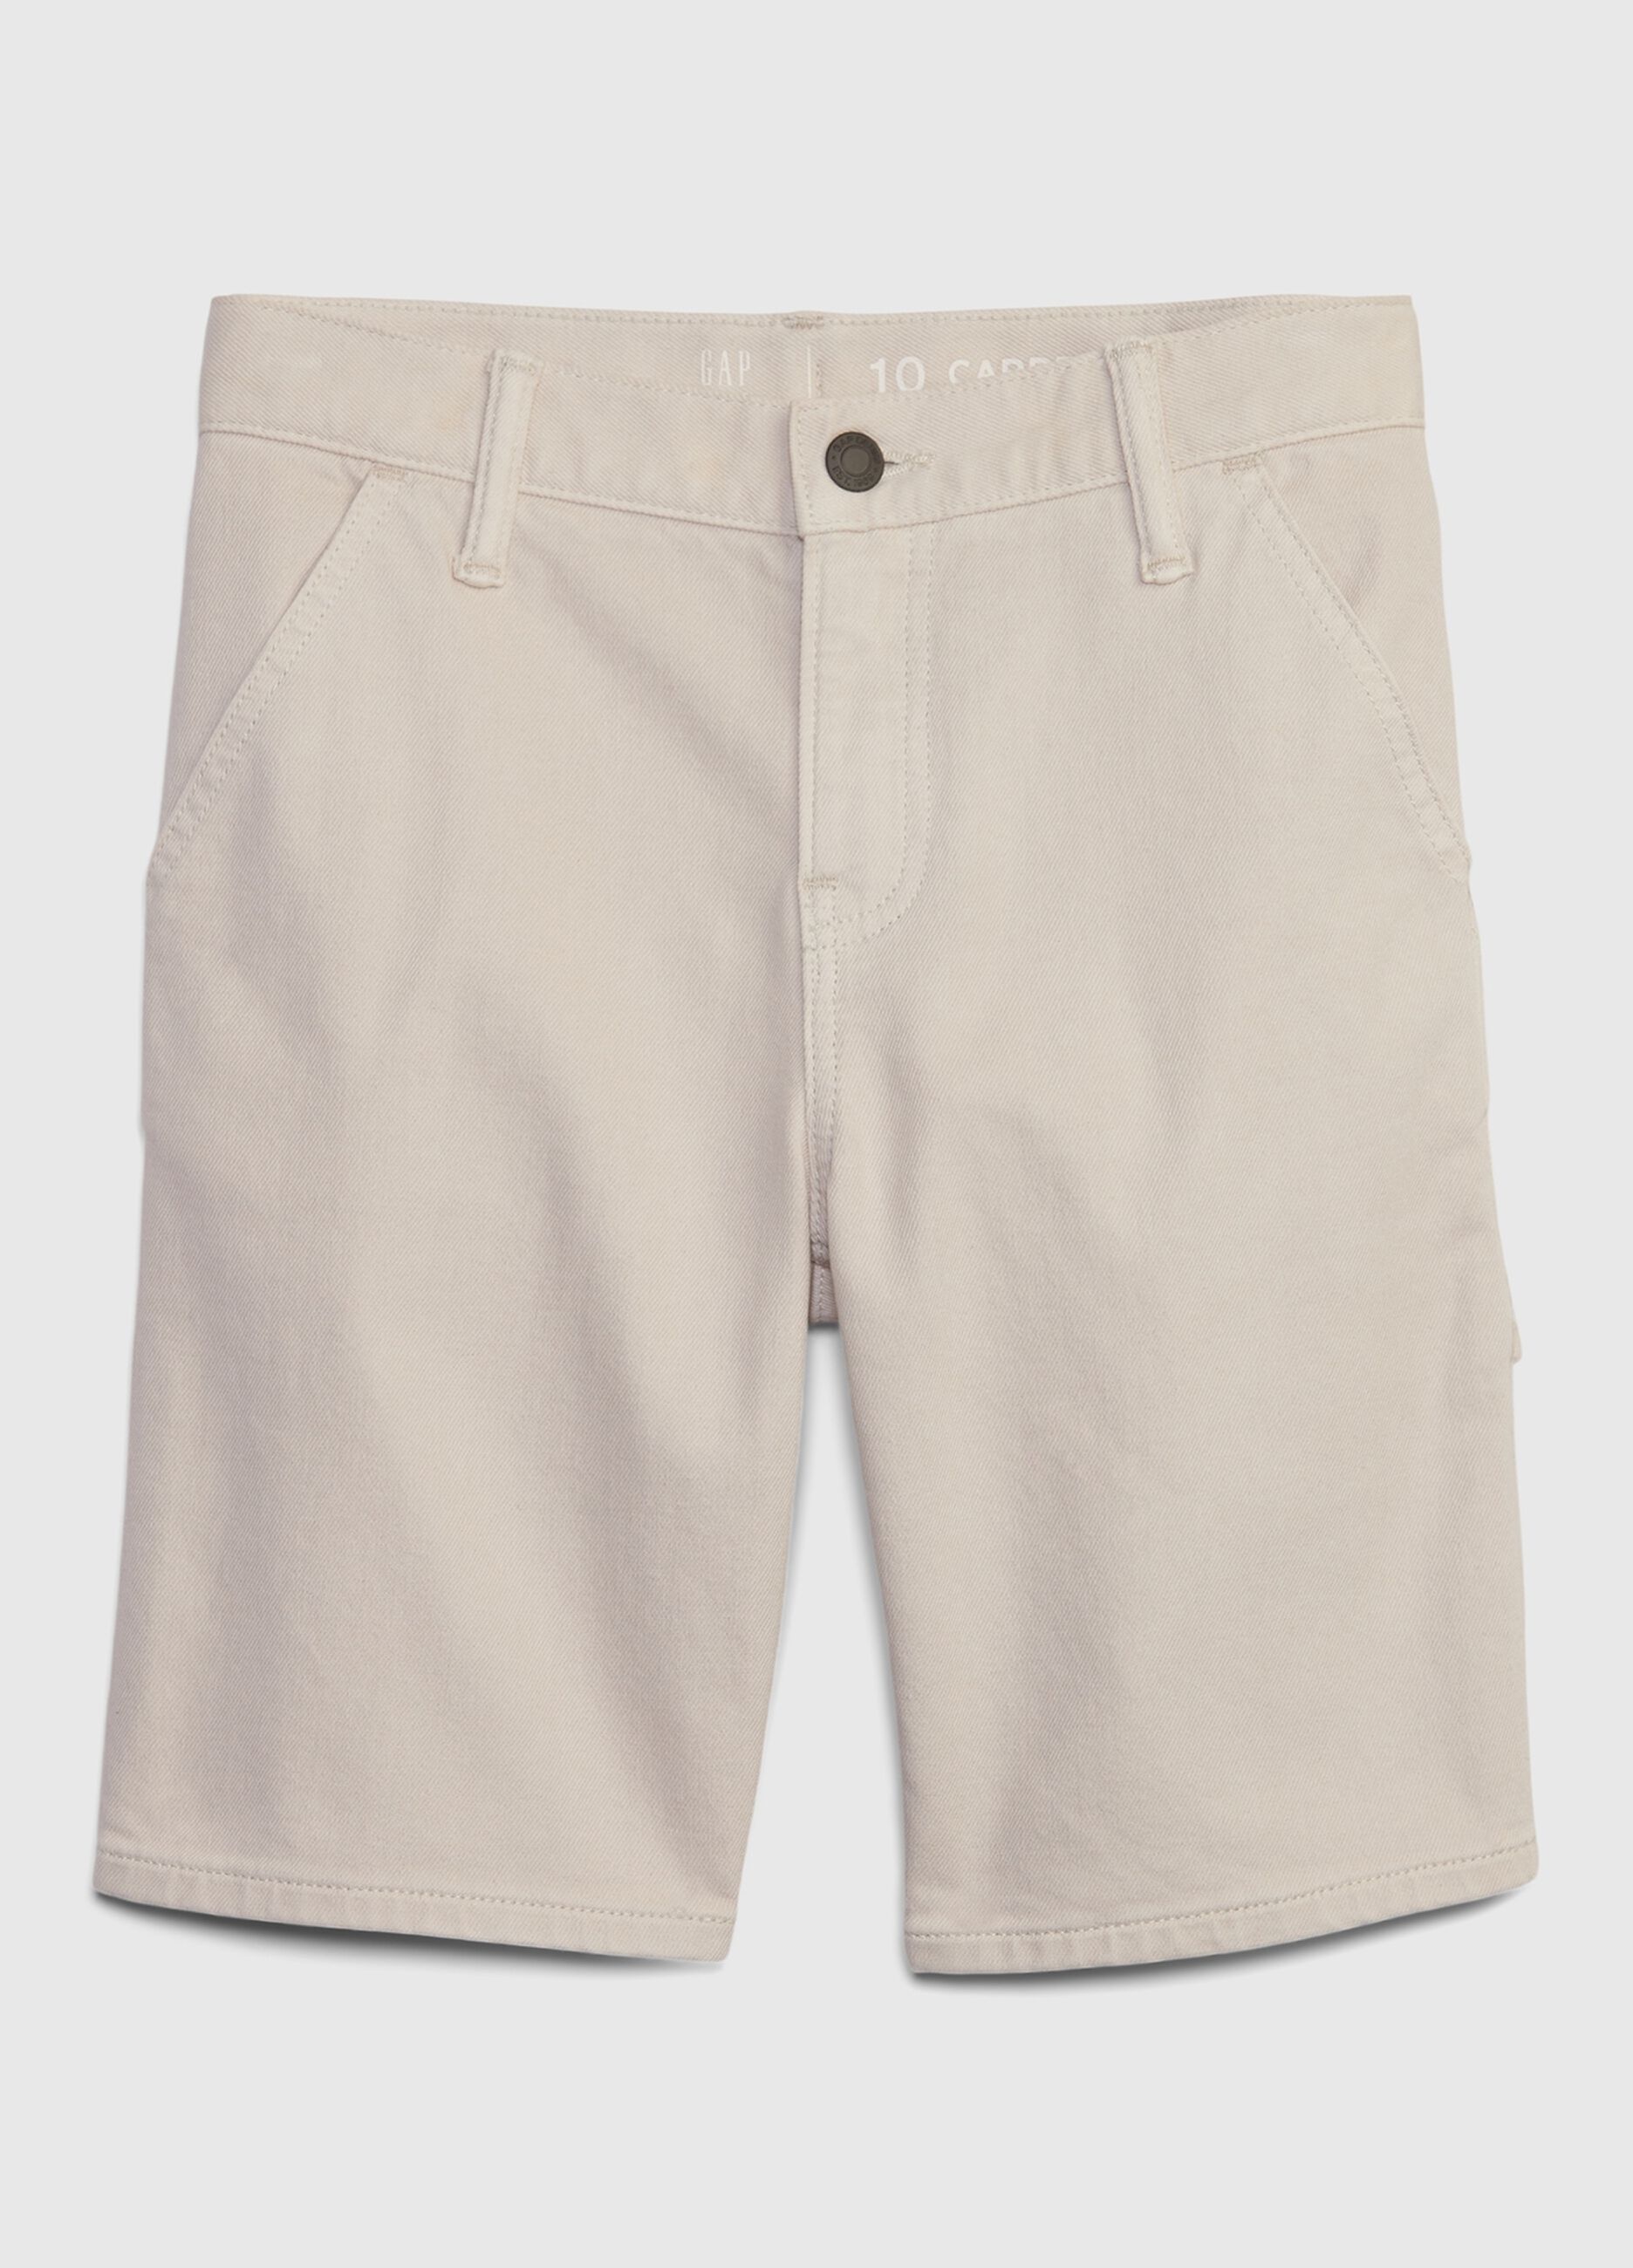 Carpenter Bermuda shorts in twill